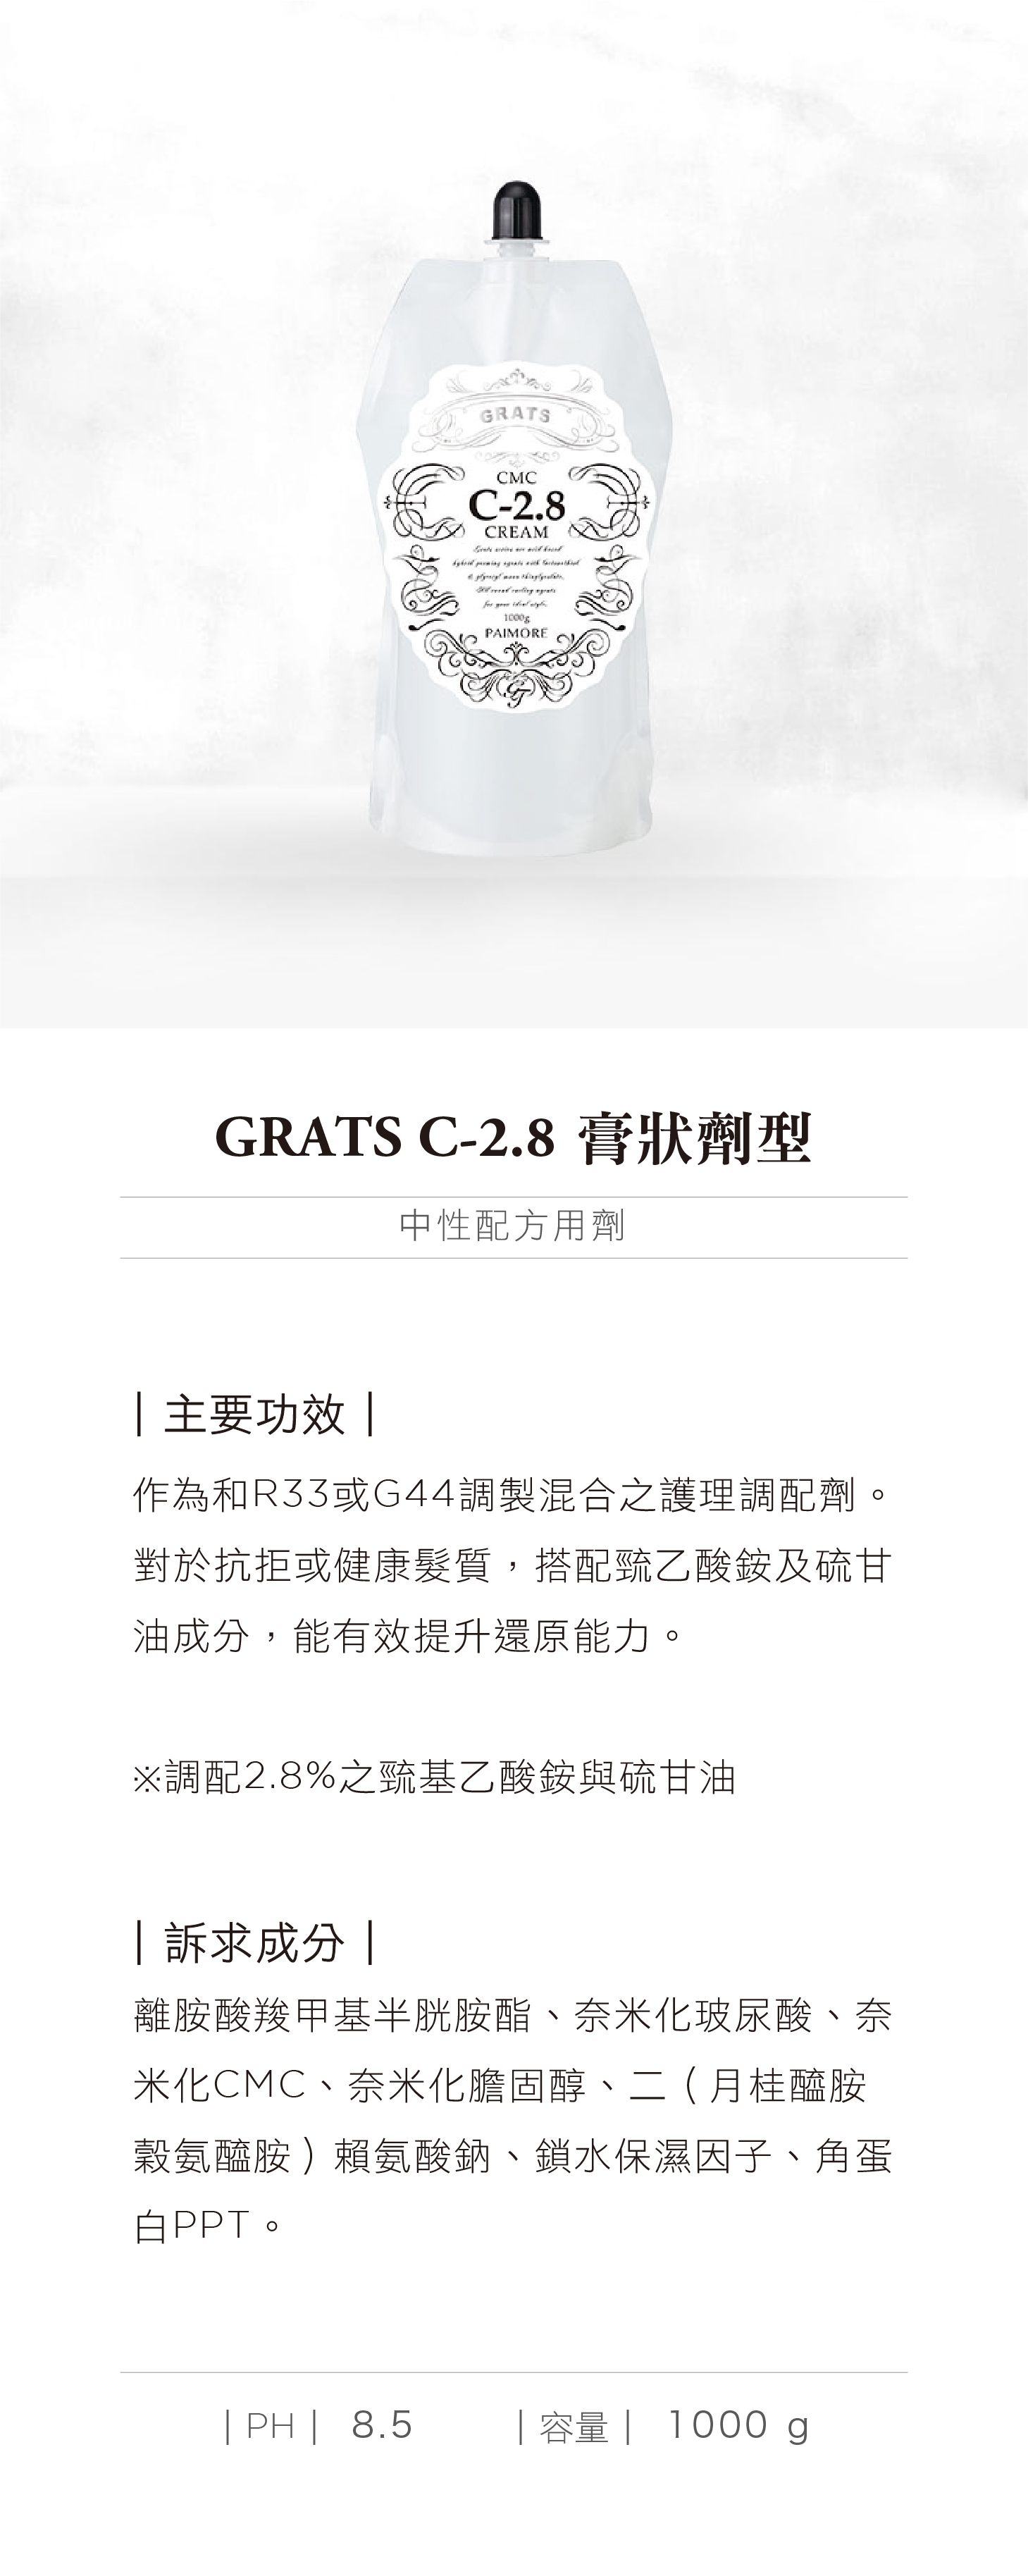 GRATS C-2.8 膏狀劑型.jpg